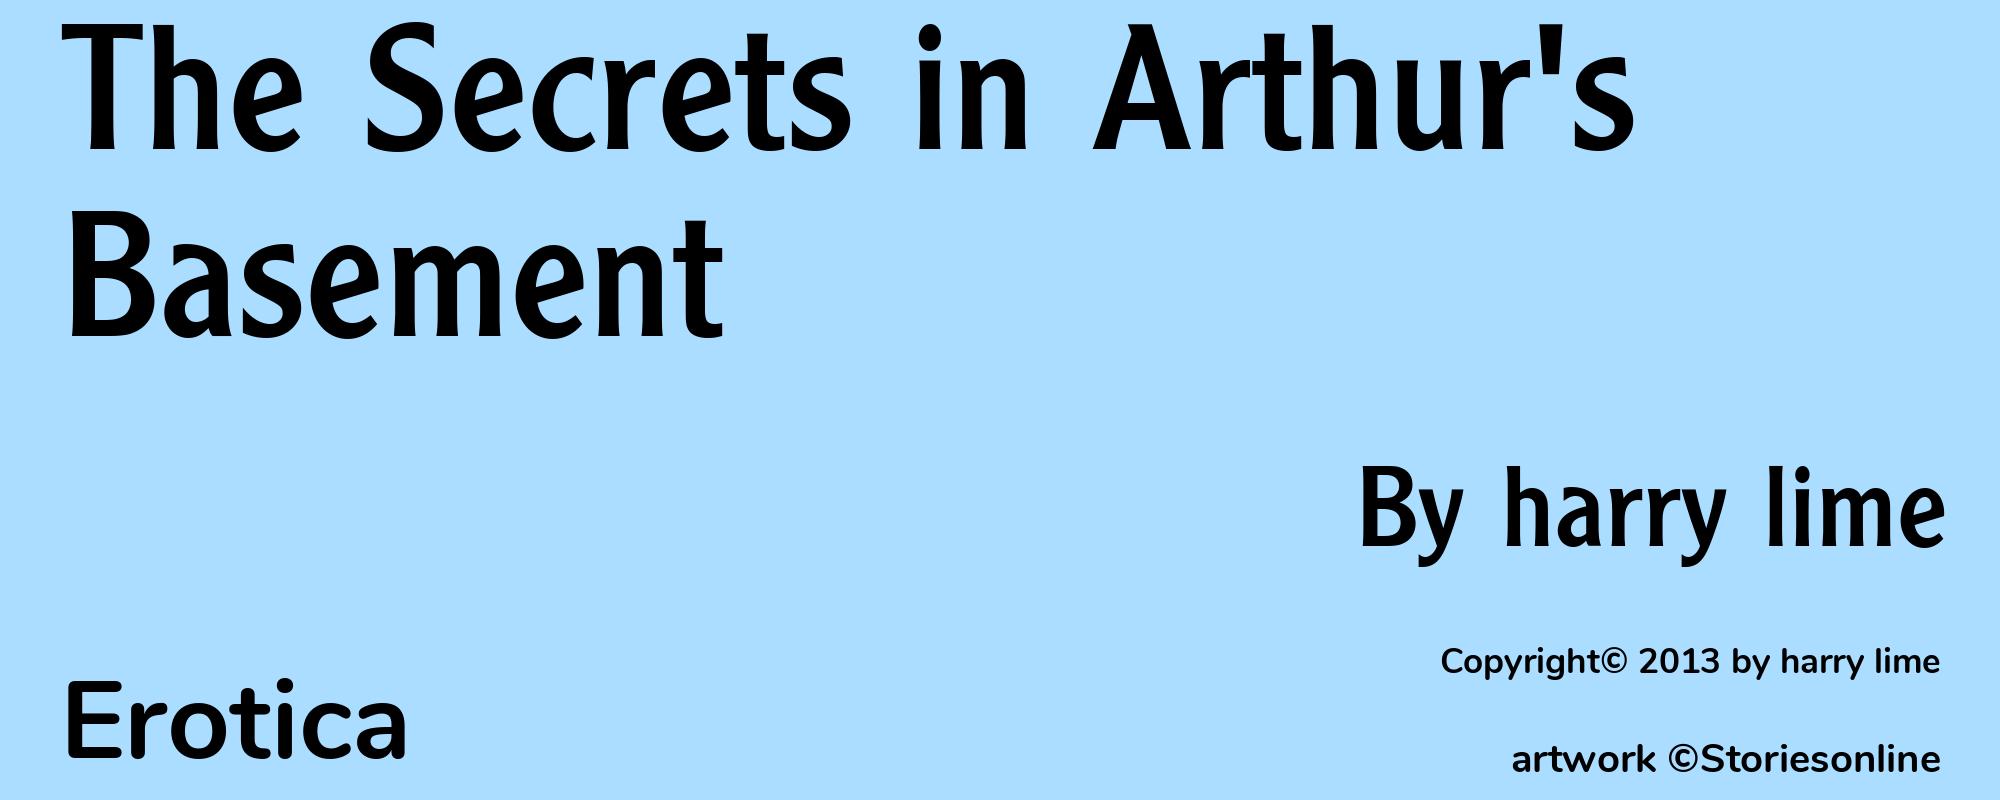 The Secrets in Arthur's Basement - Cover